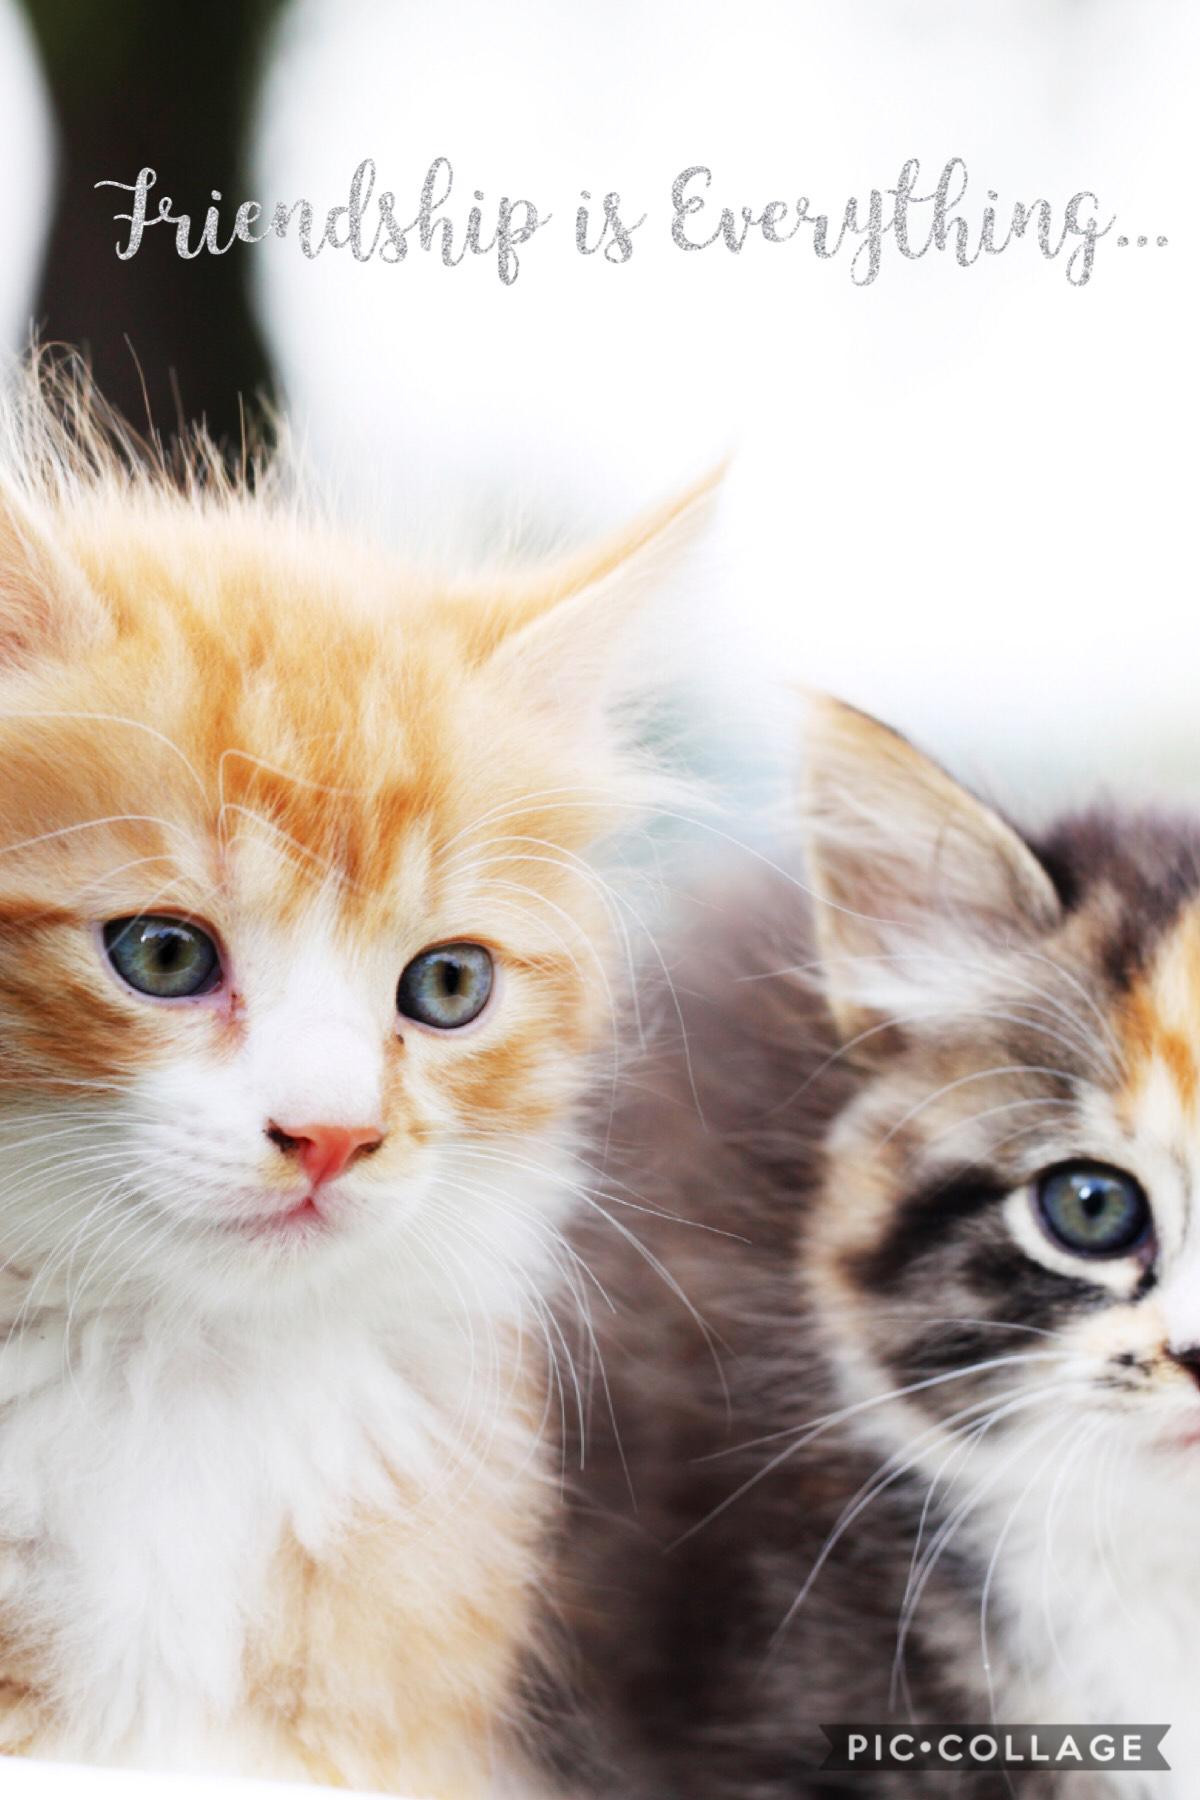 Friendship is as cute as kittens!